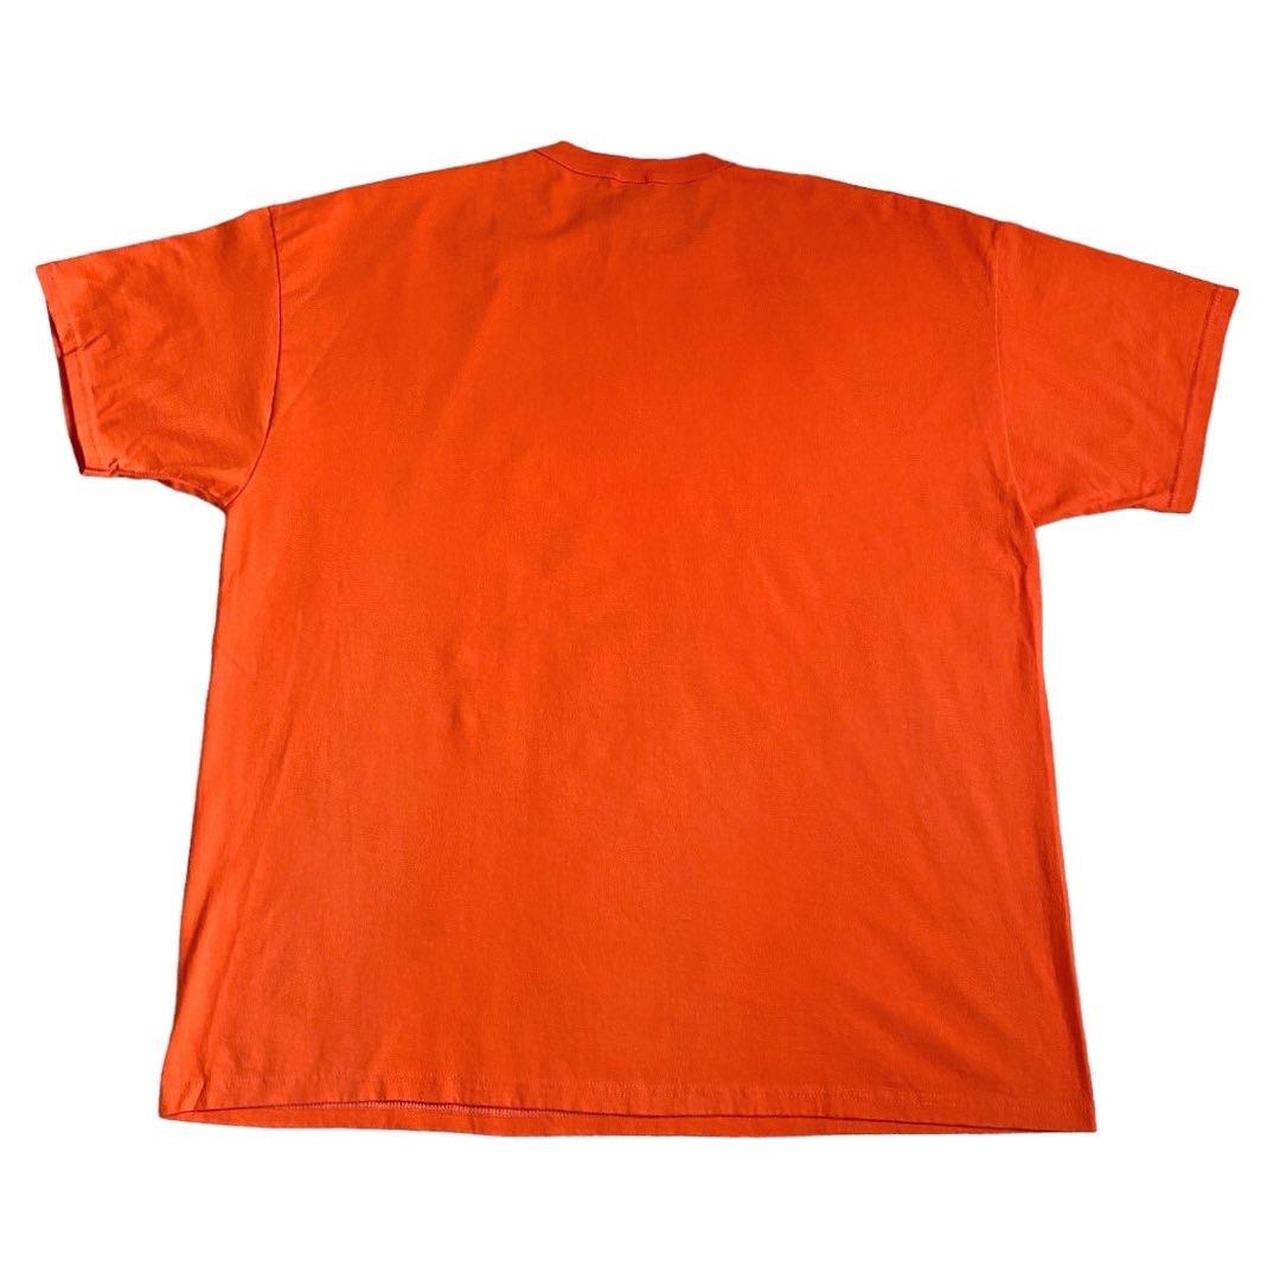 Orange Nike Dri-Fit Orioles t-shirt. The size is an - Depop